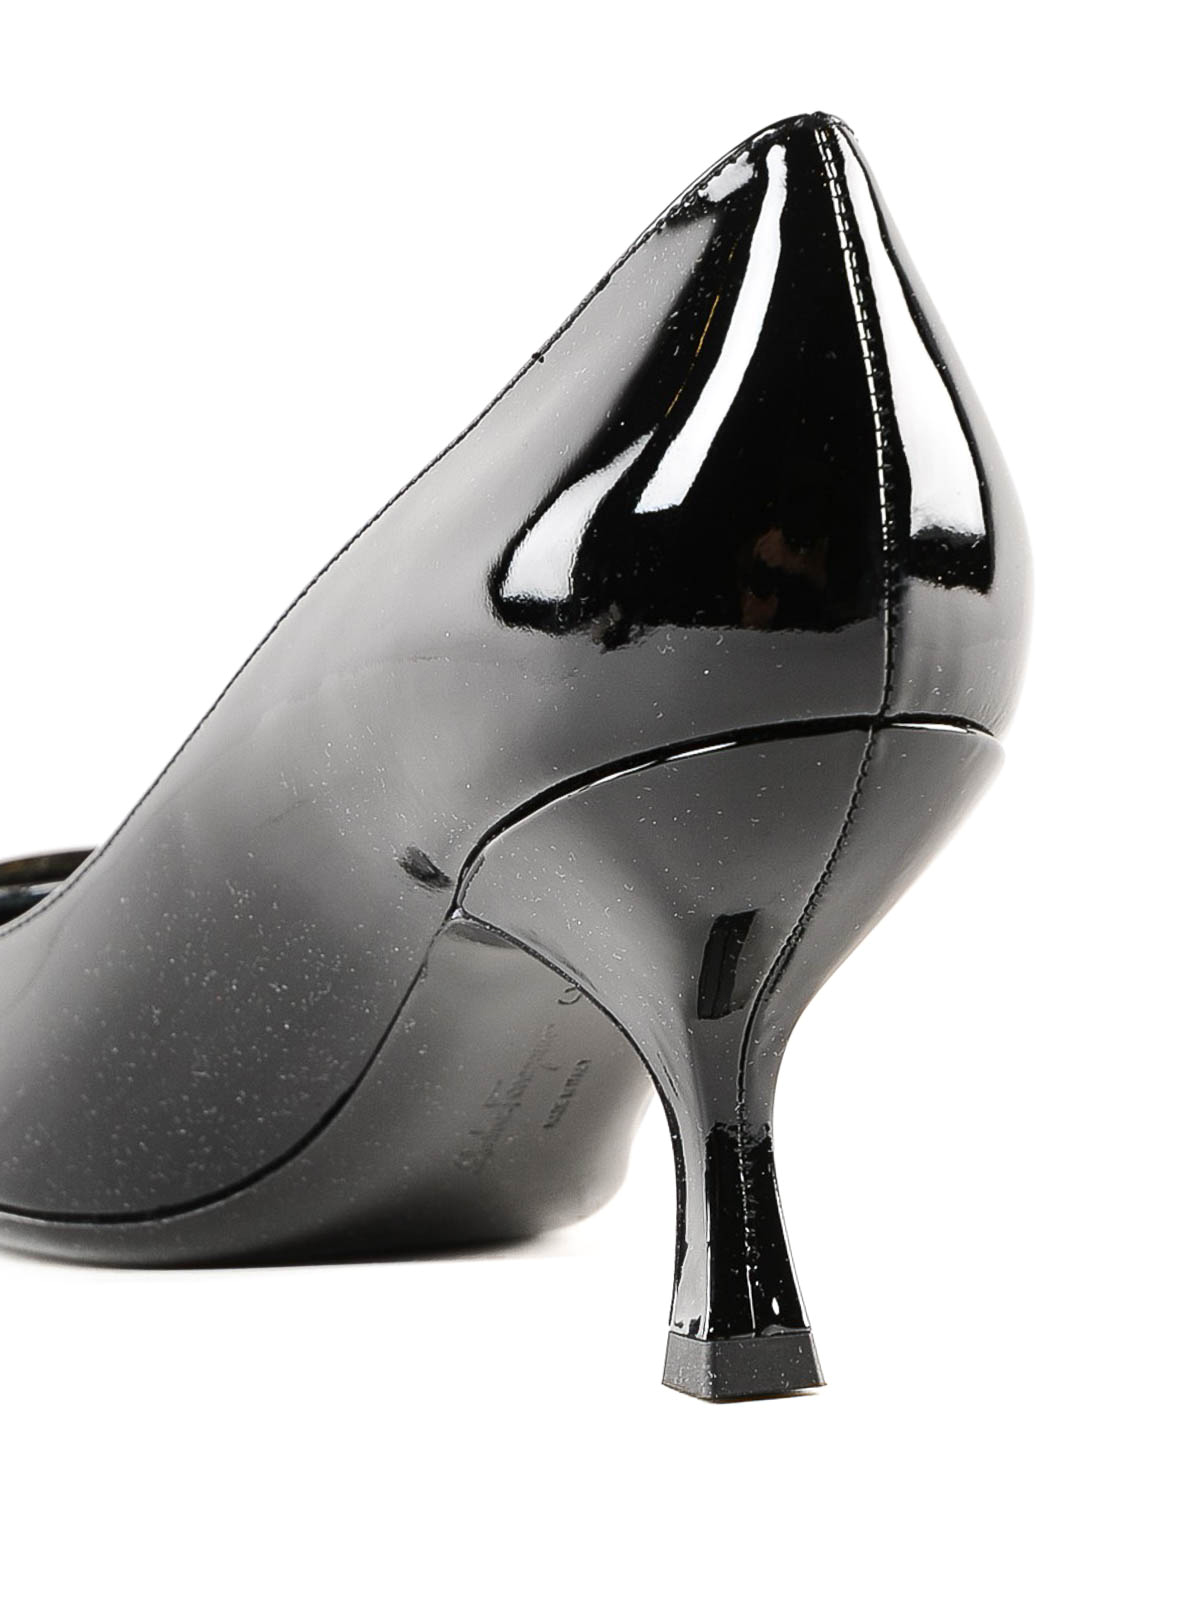 Court shoes Salvatore Ferragamo - Serina black patent pumps 